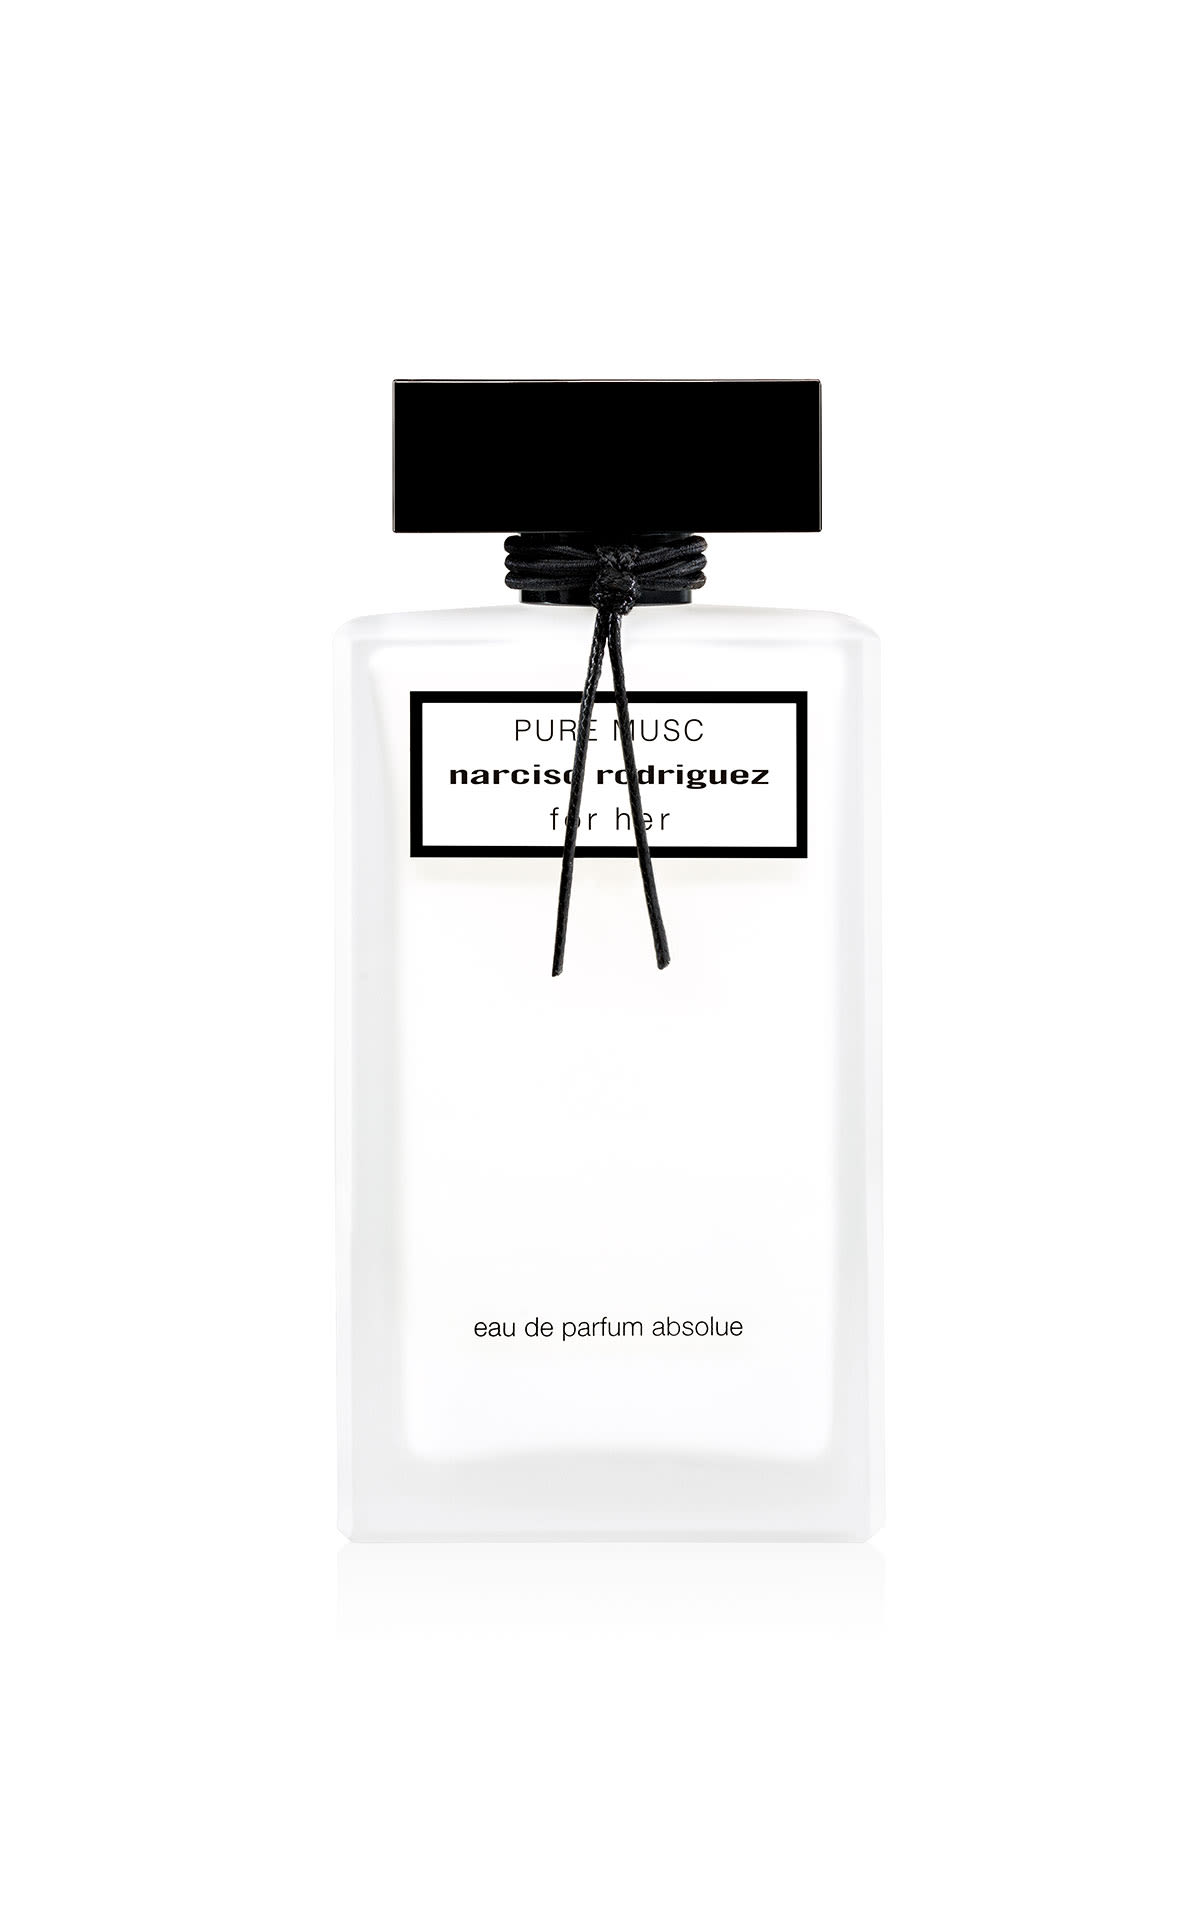 Beaute Prestige International Narciso Rodriguez Pure musc eau de parfum absolute 50ml from Bicester Village